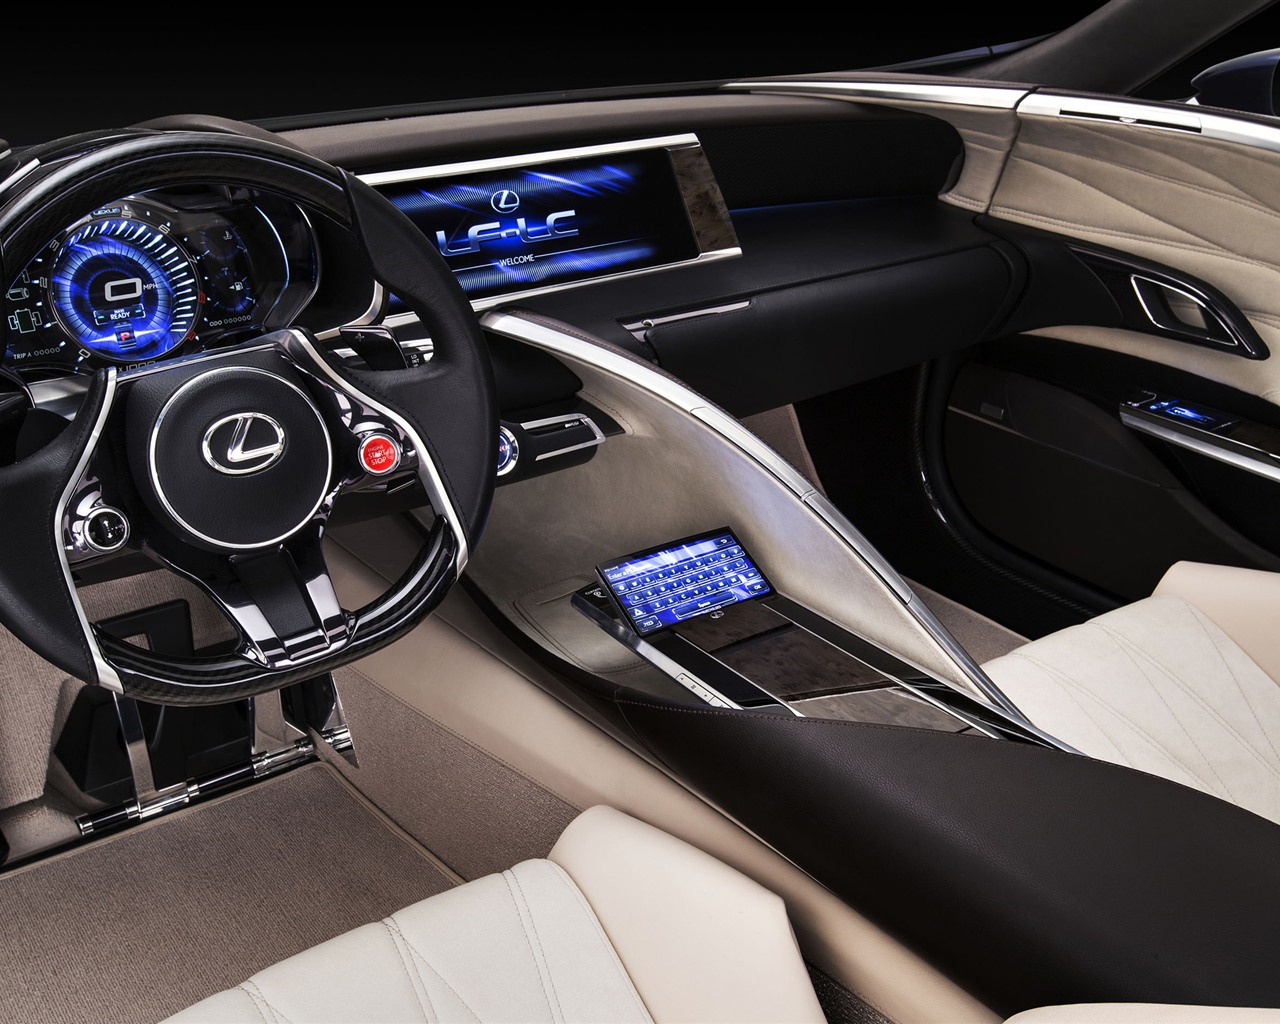 2012 Lexus LF-LC Blue concept 雷克萨斯 蓝色概念车 高清壁纸14 - 1280x1024